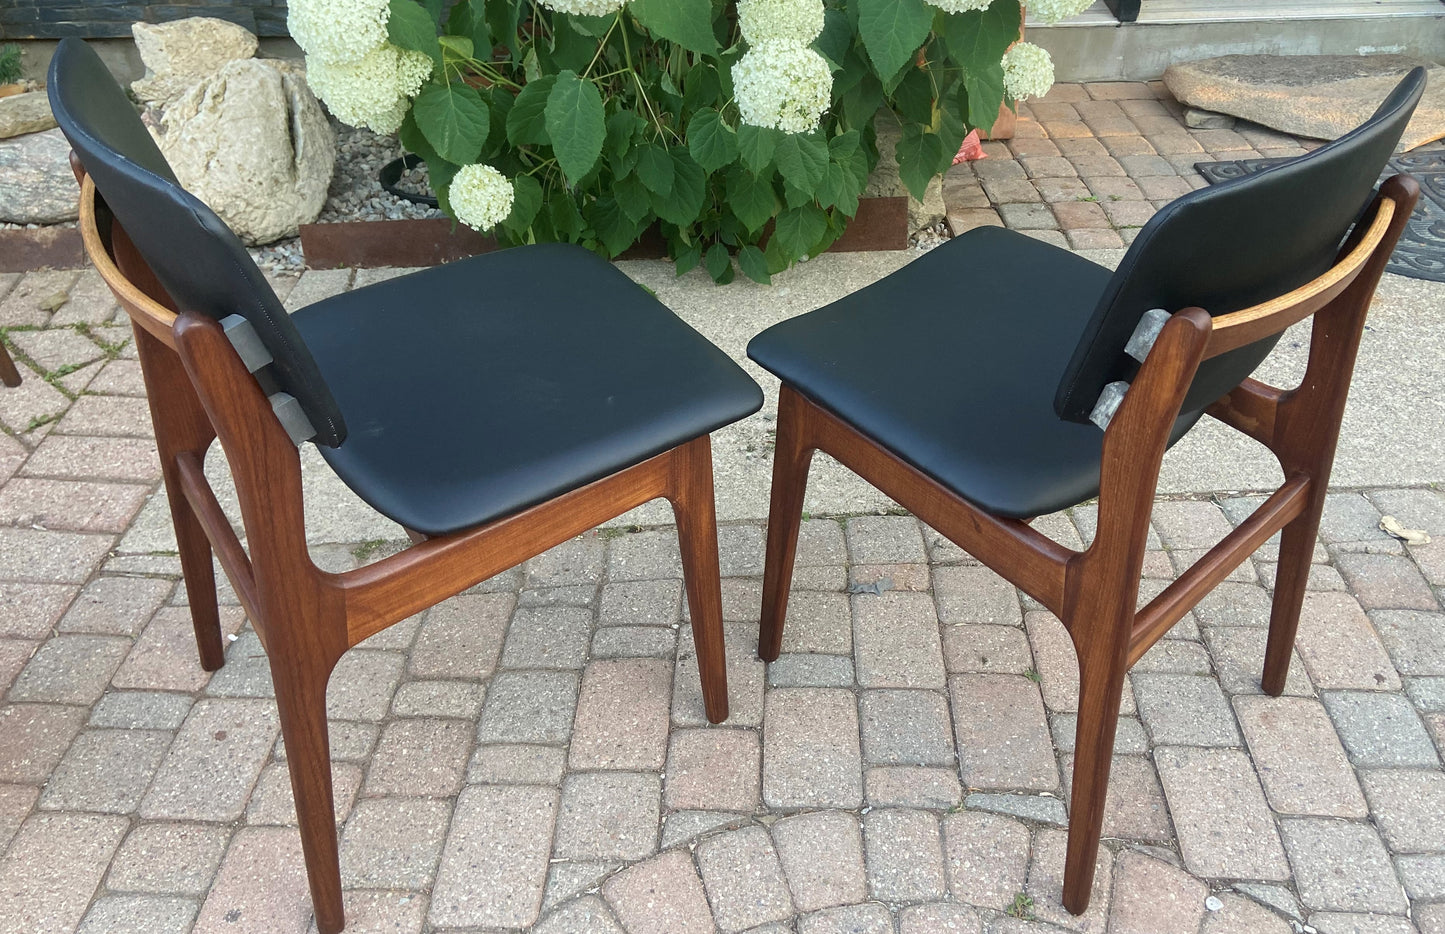 2 REFINISHED REUPHOLSTERED Danish Mid Century Modern Teak Chairs